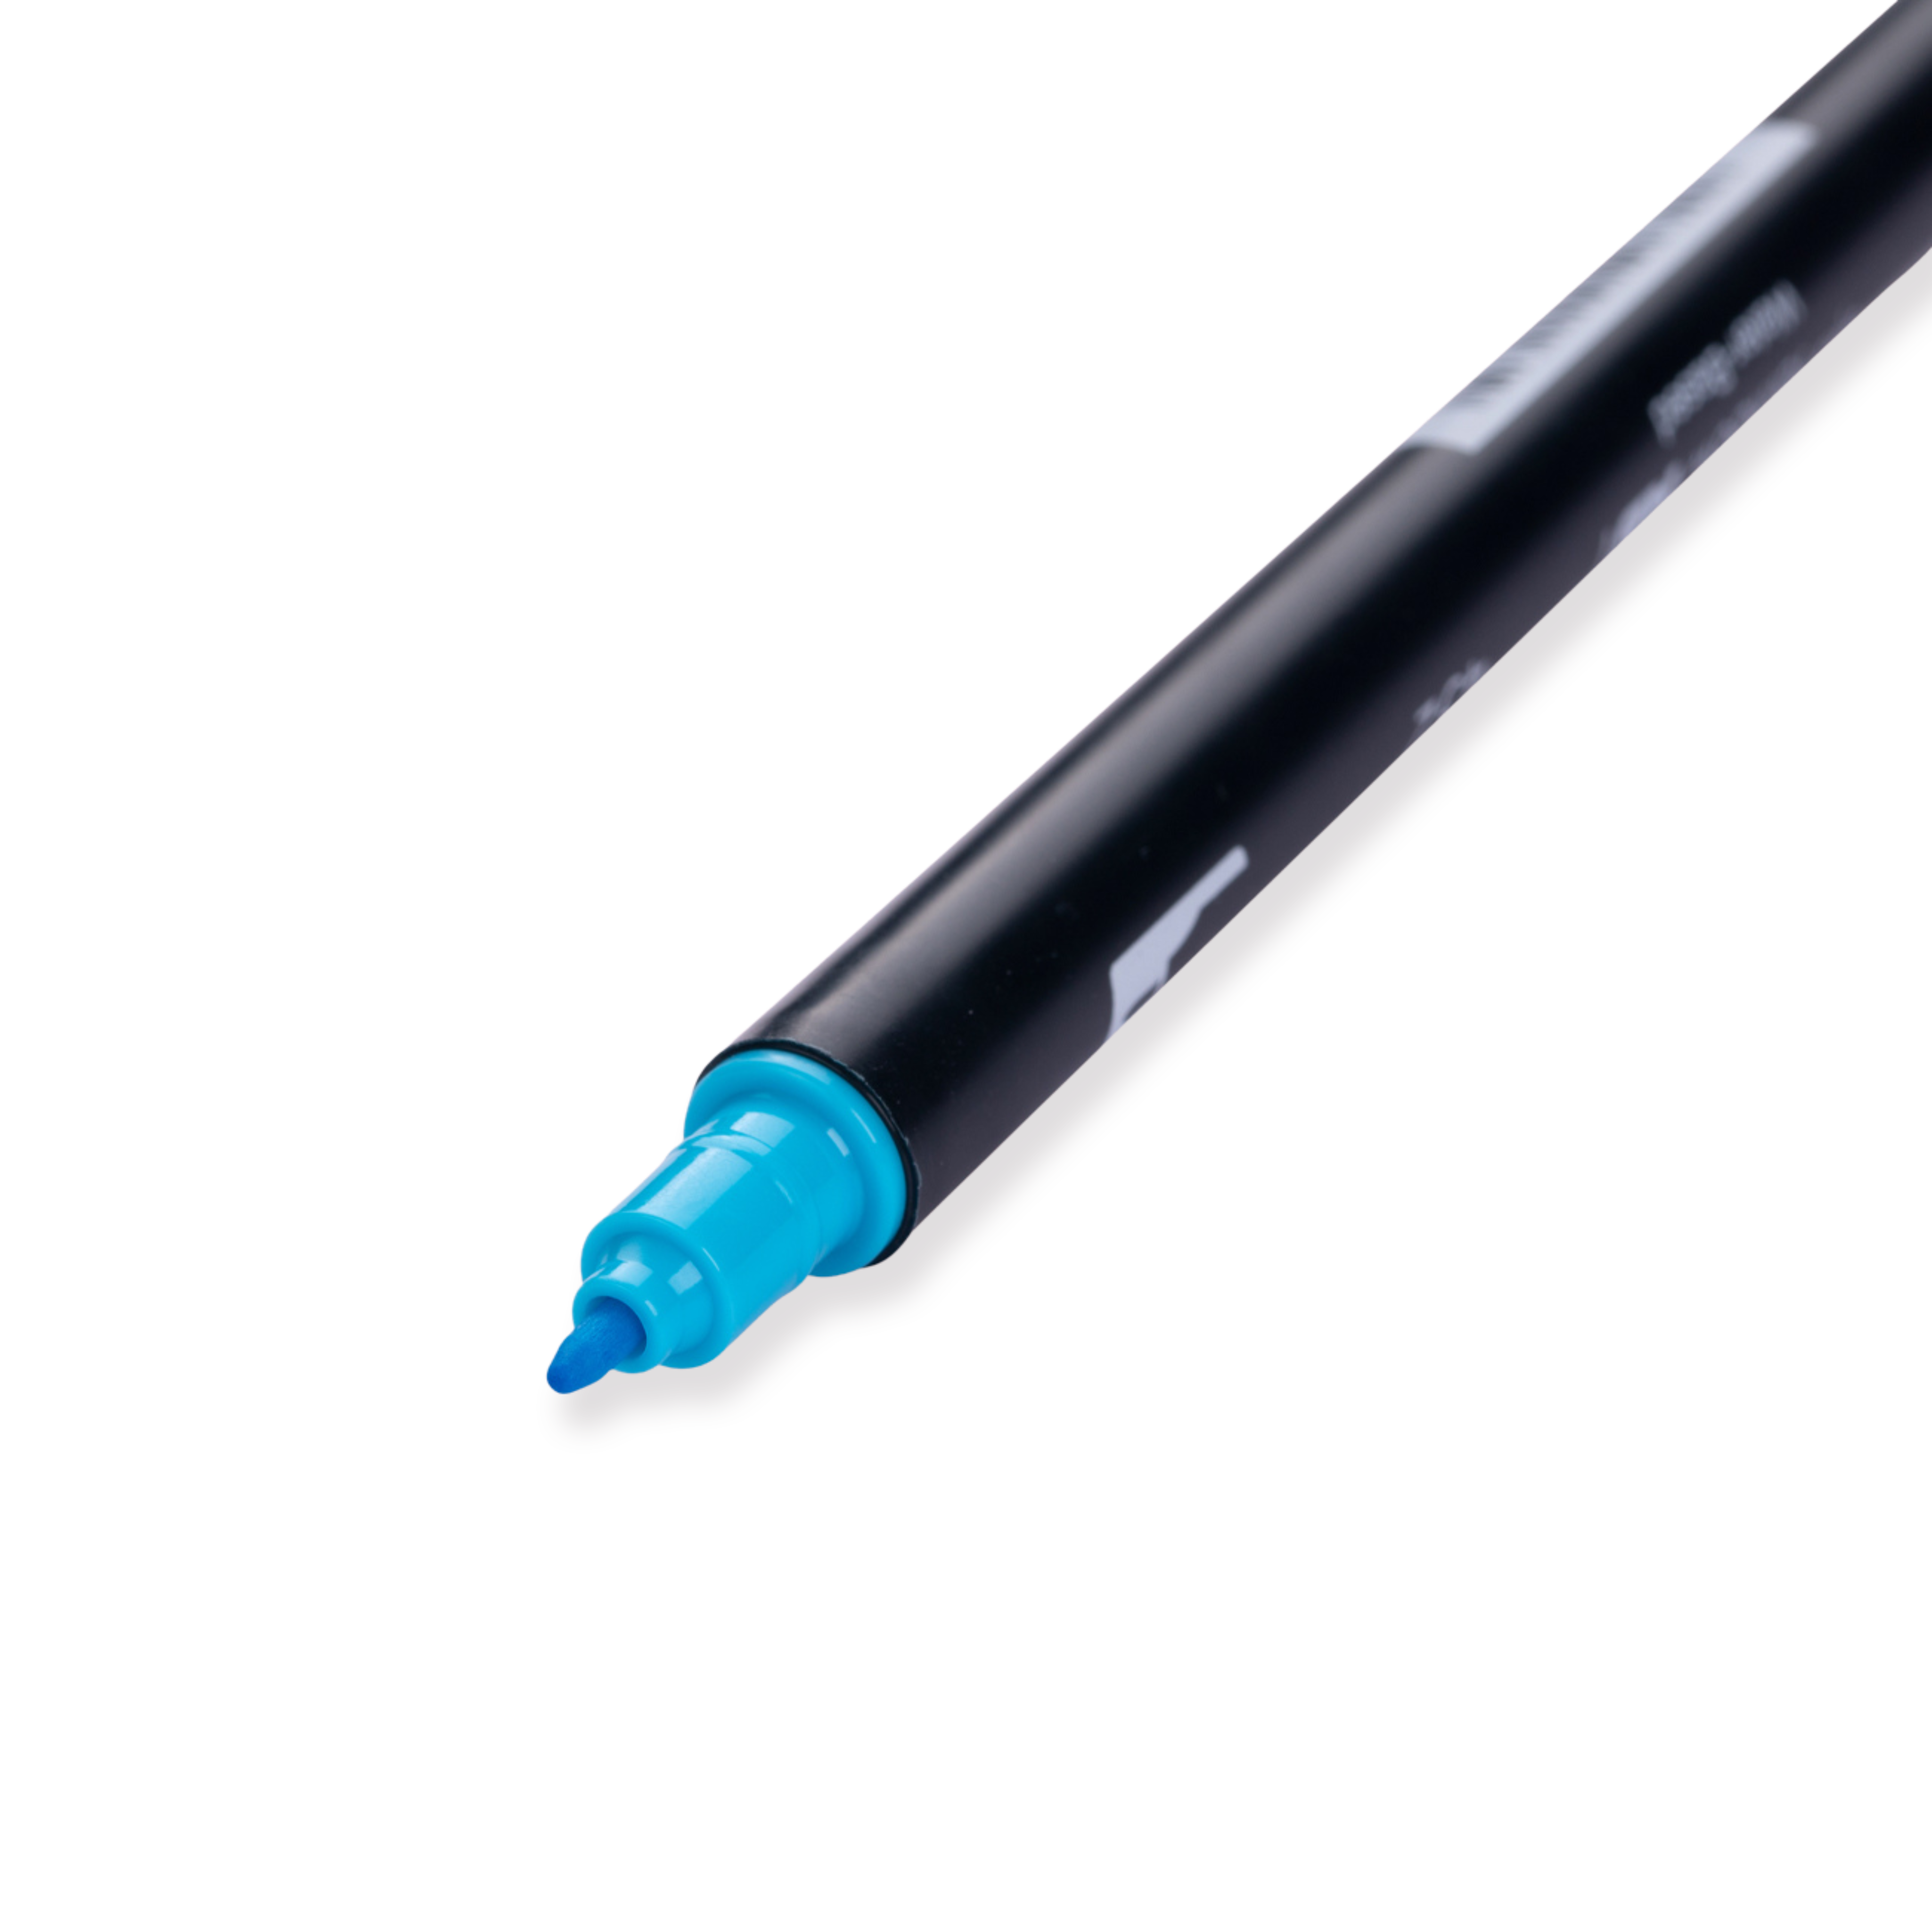 Tombow Dual Brush Pen - 452 - Process Blue